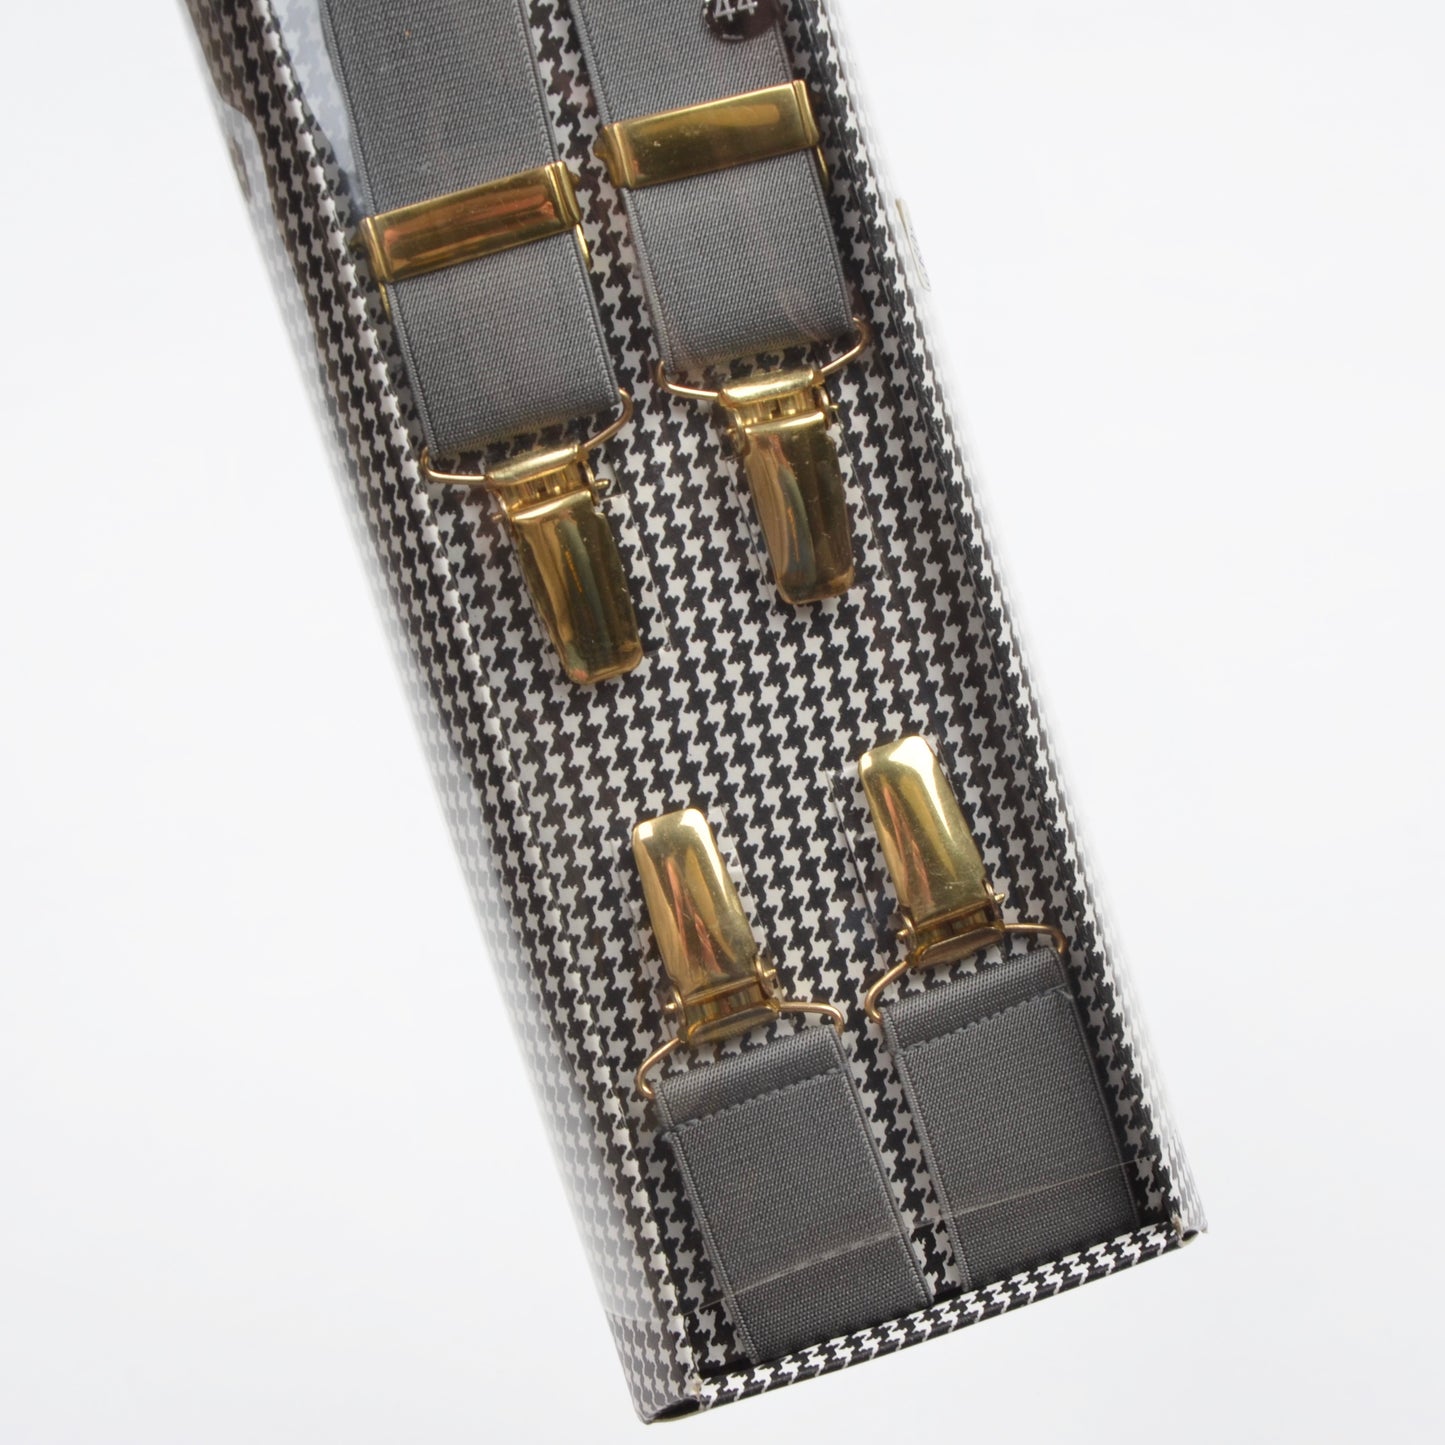 Vintage Albert Thurston Braces/Suspenders Size 44 - Grey/Silver